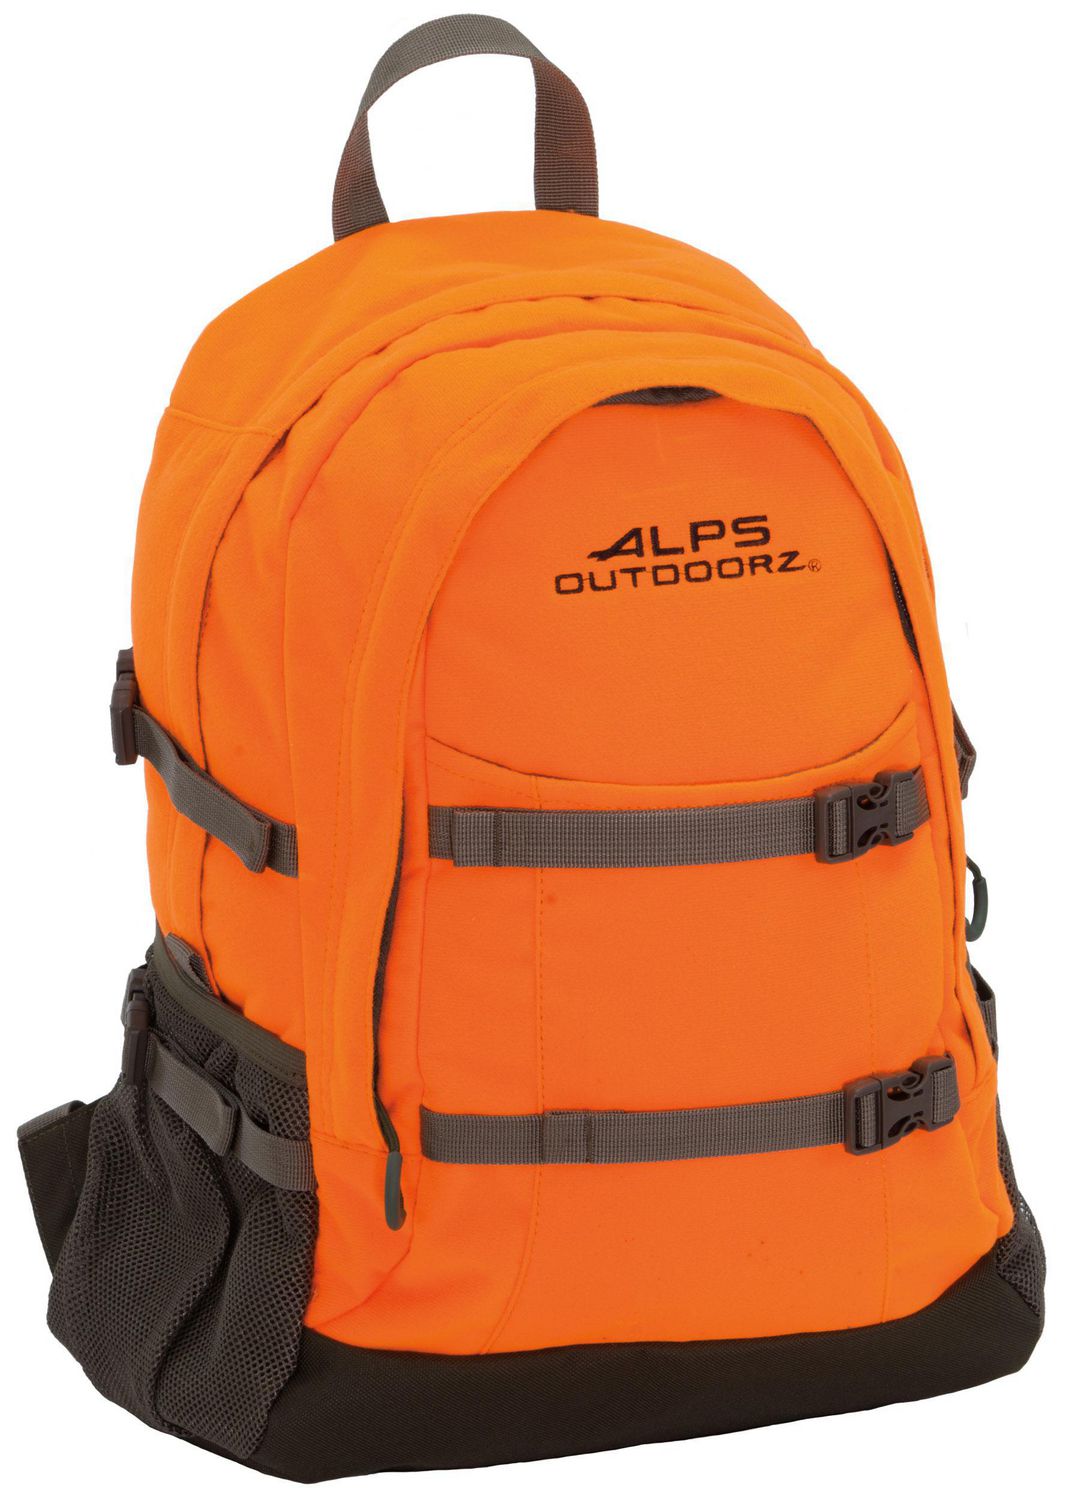 Alps Outdoorz Crossbuck Blaze Orange Hunting Day Pack | Walmart Canada